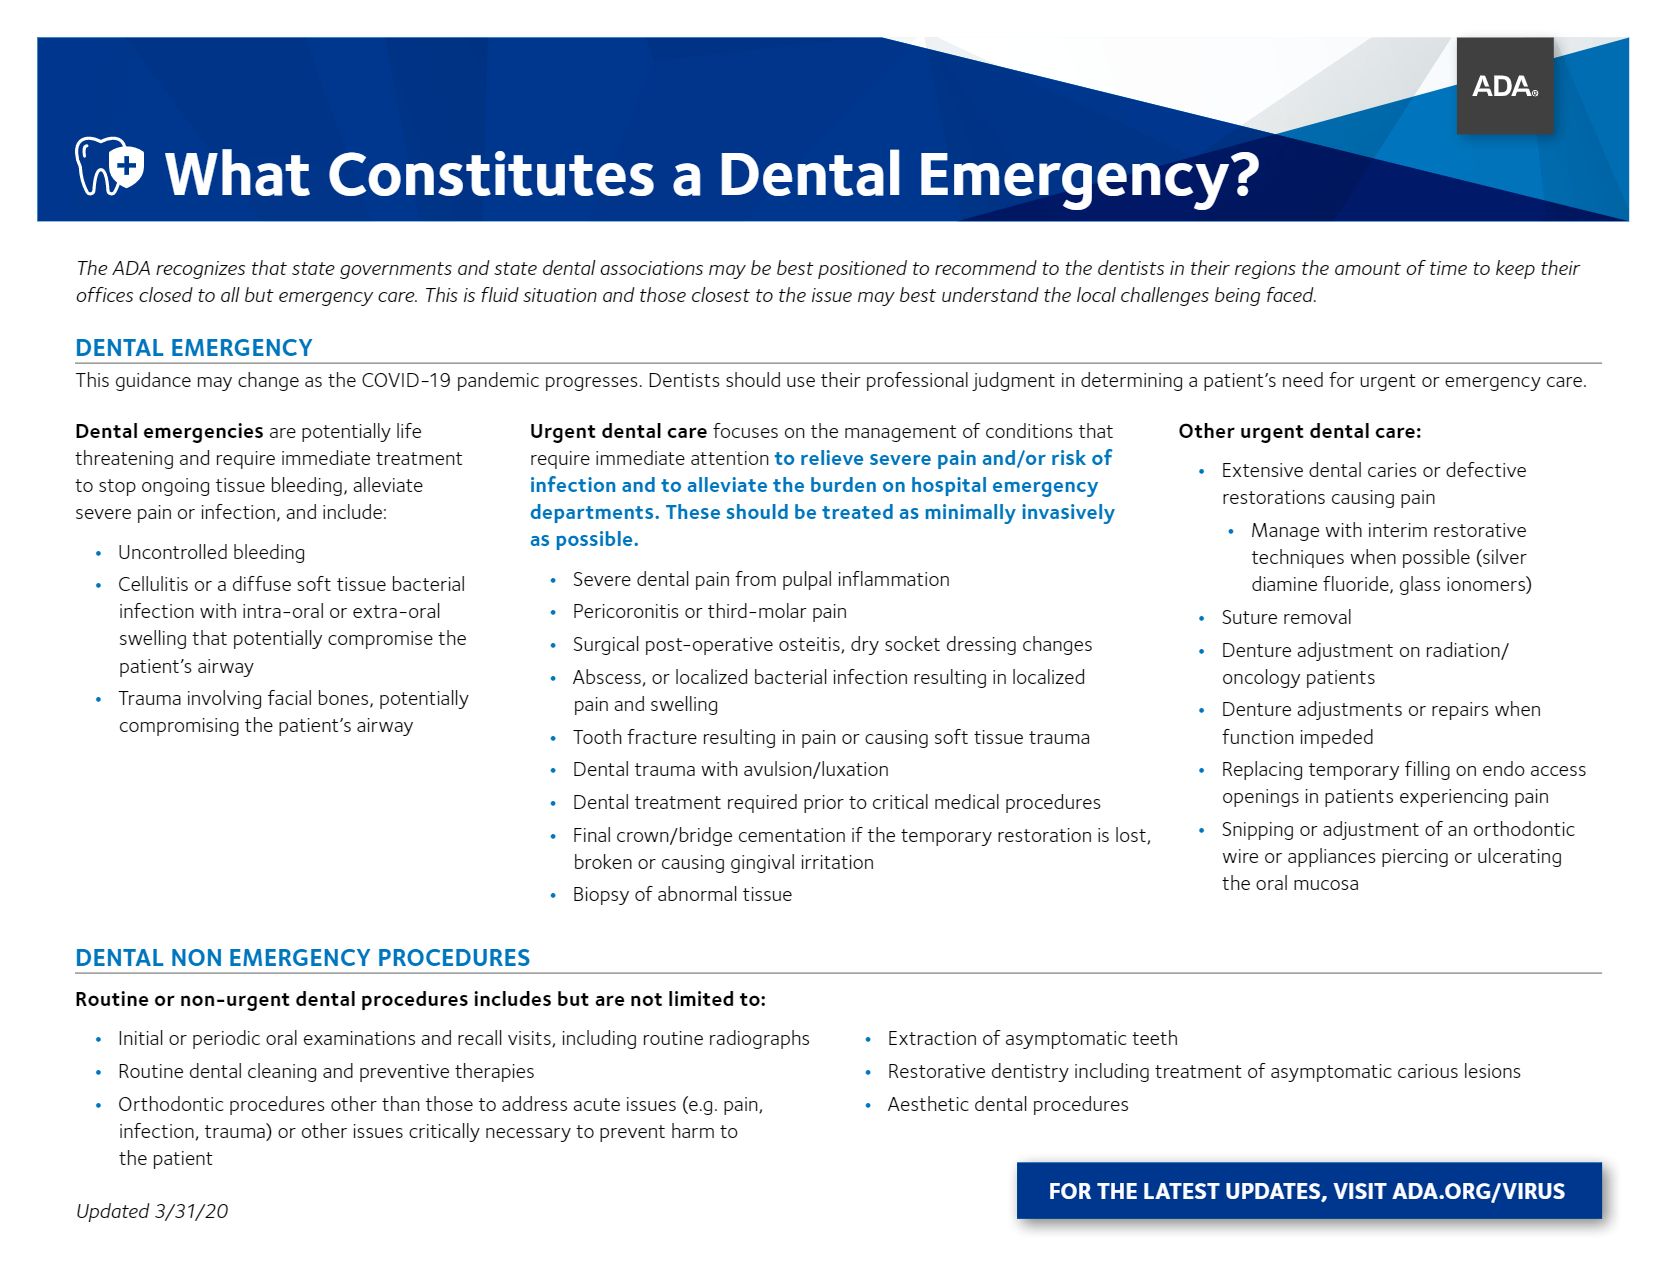 American Dental Association Dental Emergency Guidelines